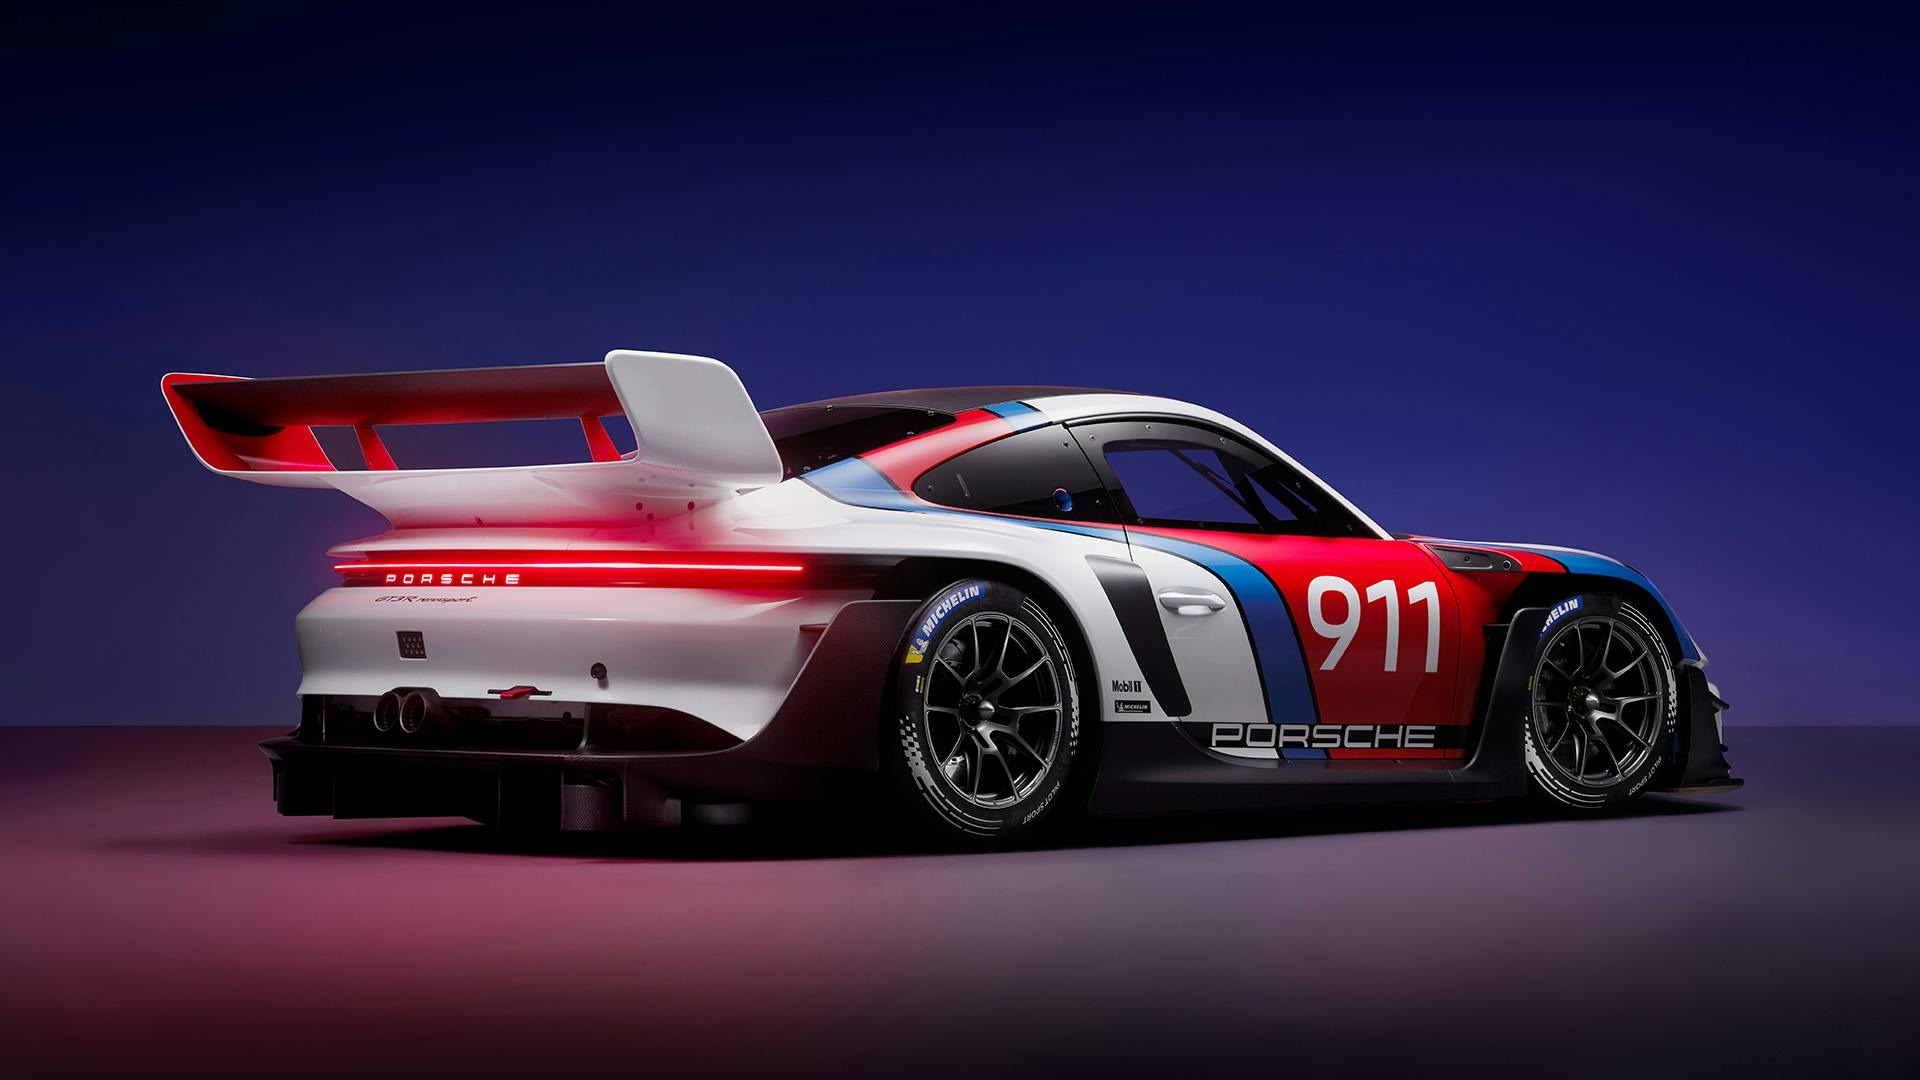 Porsche new 911 GT3 R rennsport